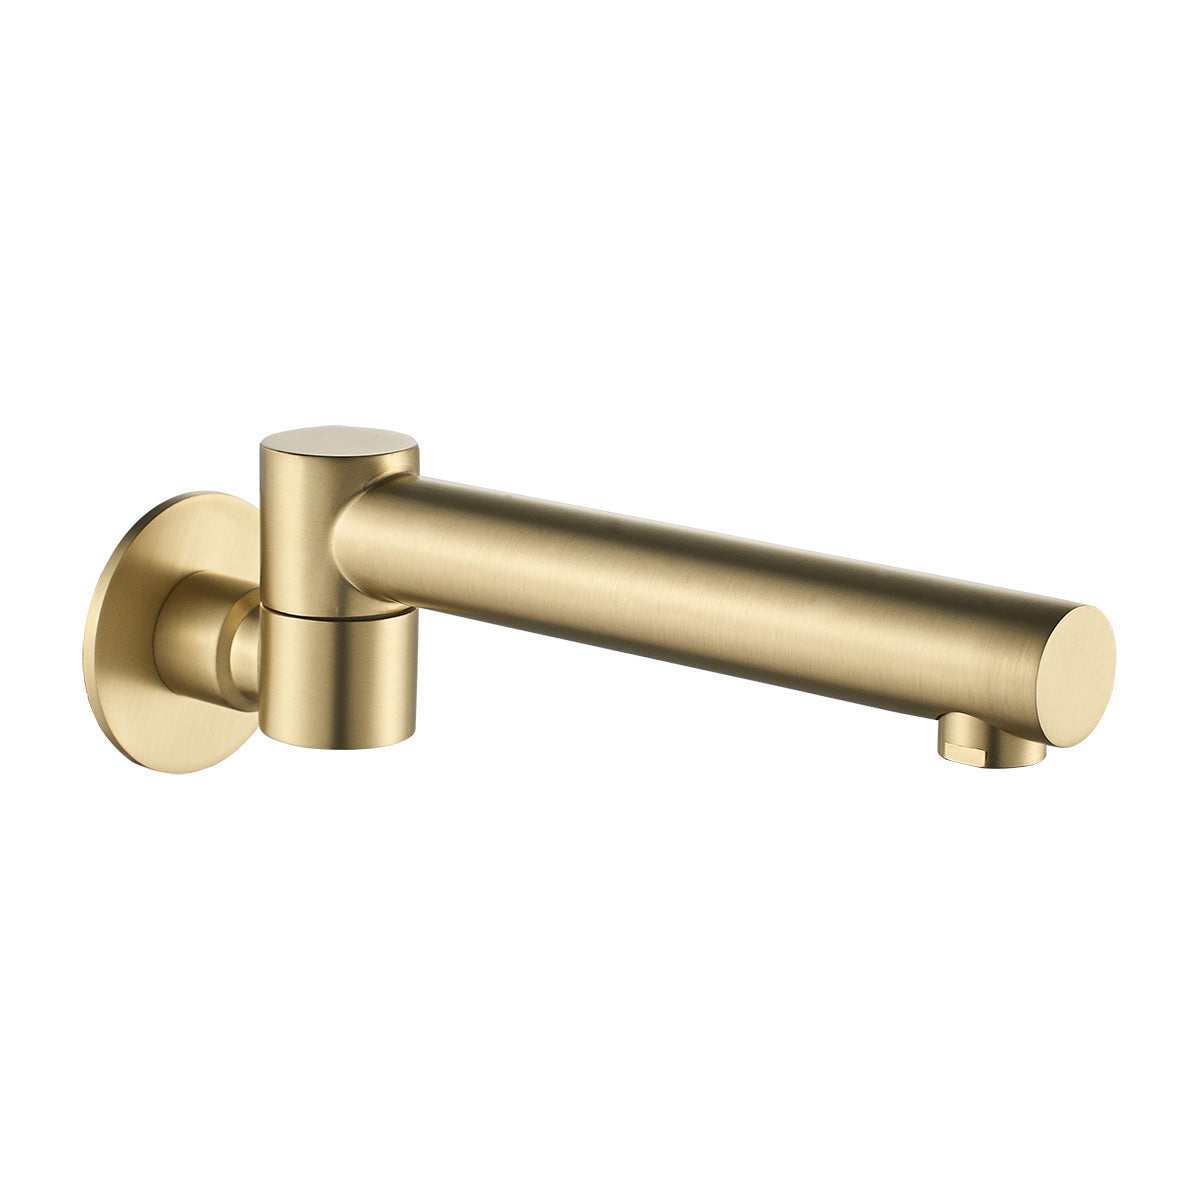 CS24 (BG) / Ideal Swivel Bath Outlet (Brushed Gold) - Hellycar Brushed Gold Swivel Bath Spout